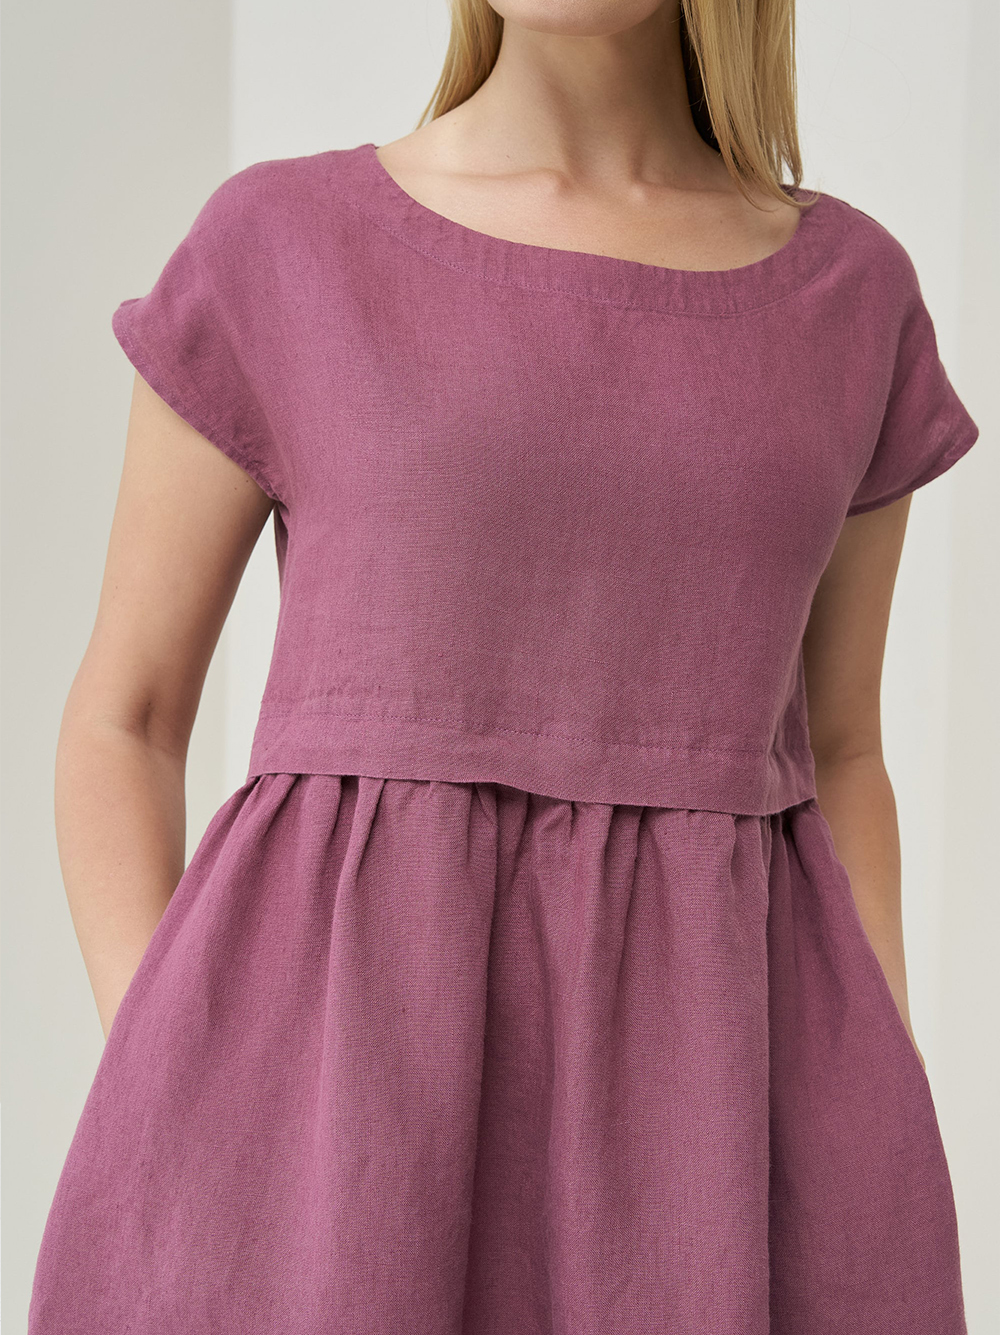 COZINEN Women's Solid Color Round Neck Short Sleeve Pocket Dress